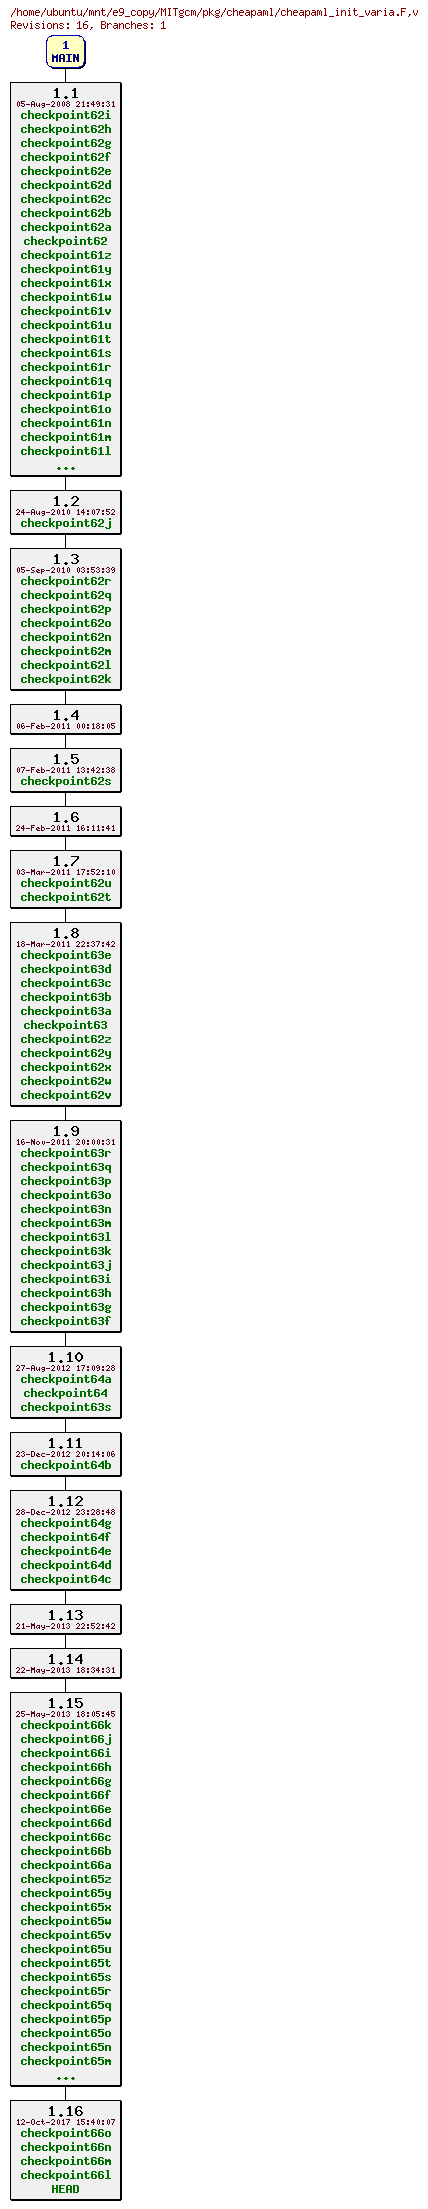 Revisions of MITgcm/pkg/cheapaml/cheapaml_init_varia.F